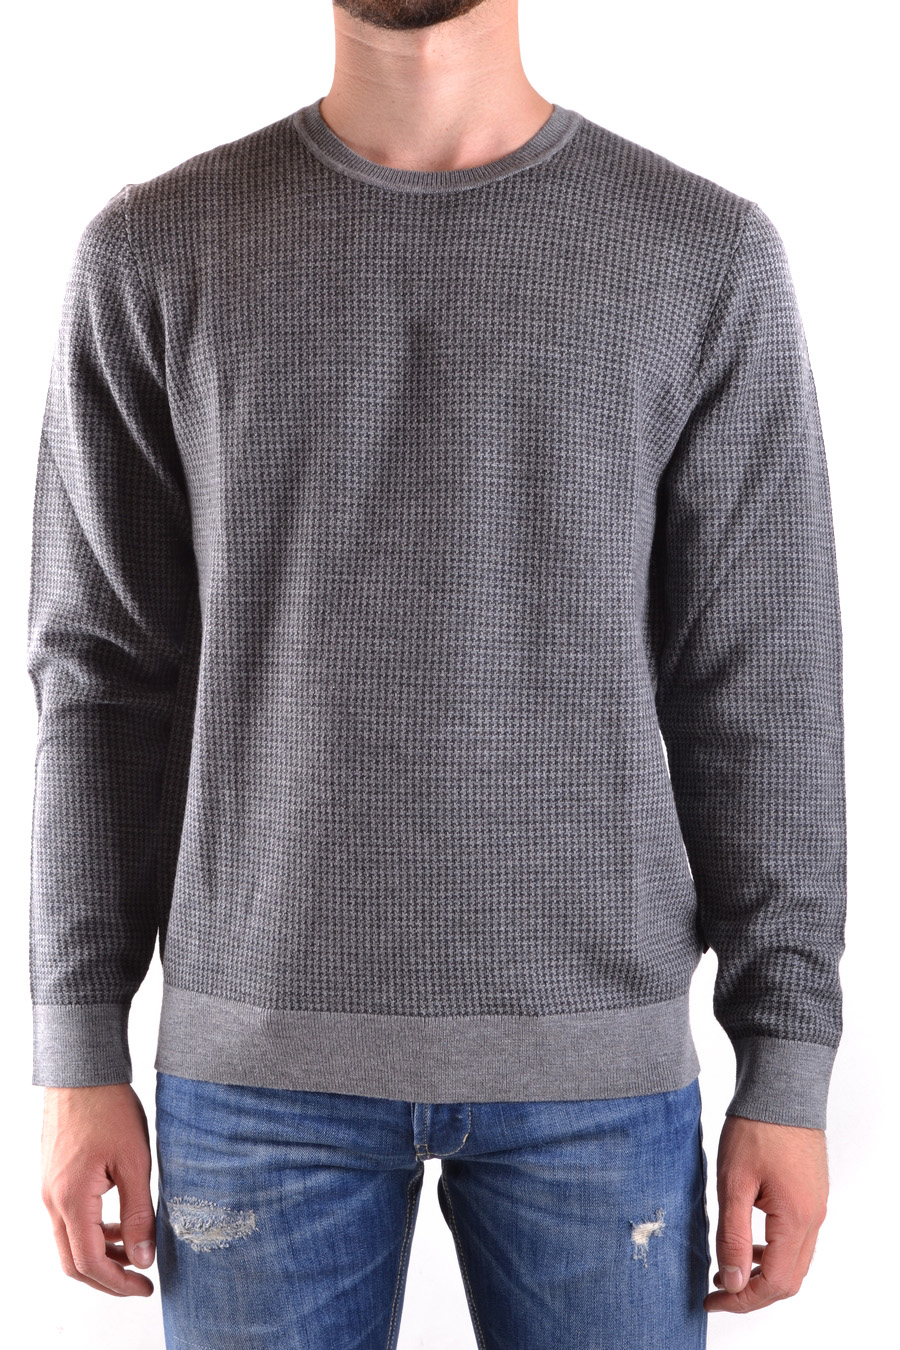 michael kors pullover sweater